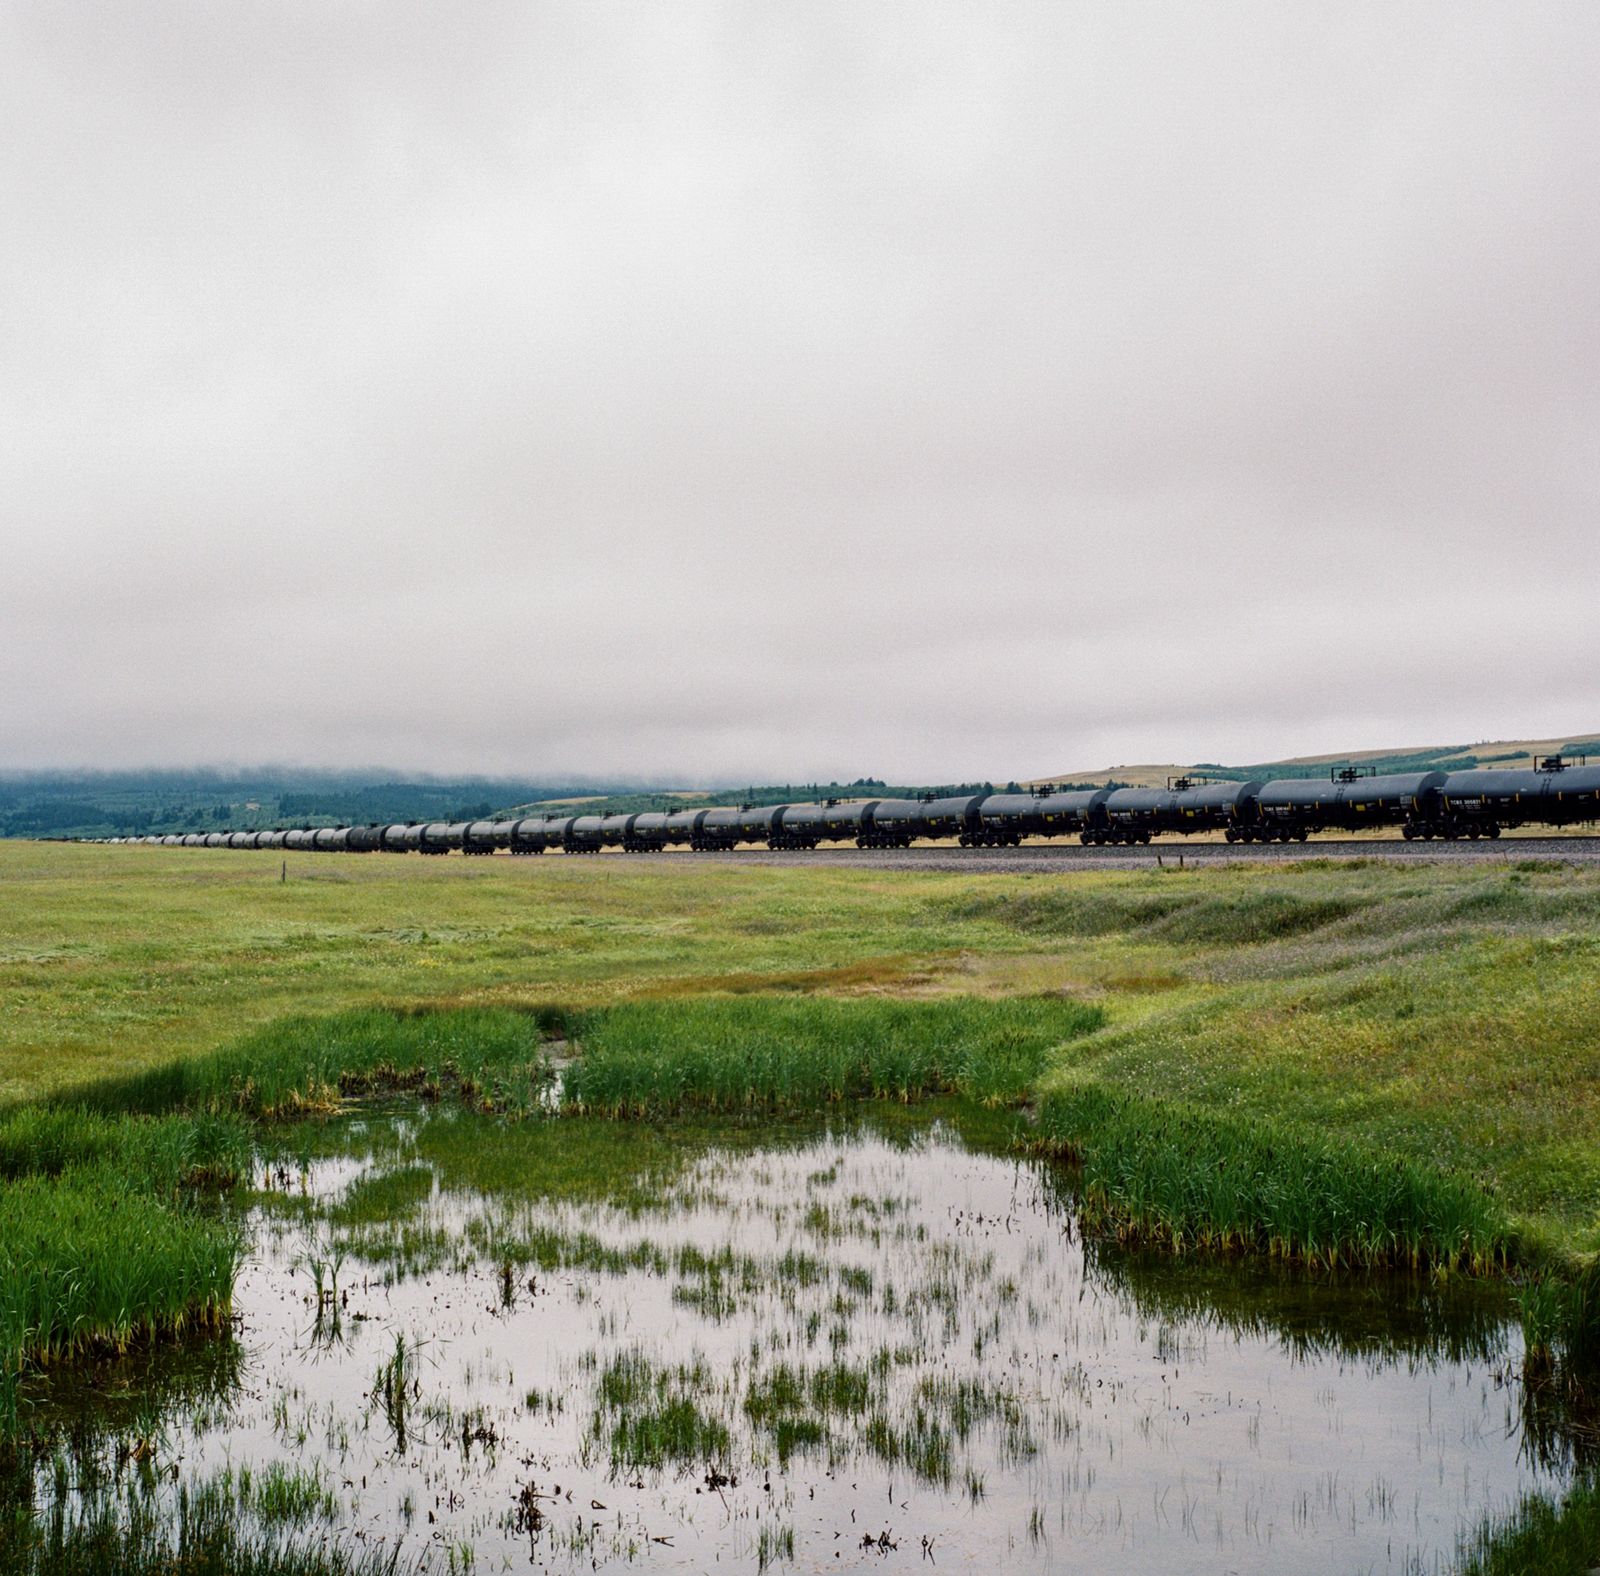 © Sara Hylton - A freight train carrying crude oil travels through Blackfeet Indian reservation.